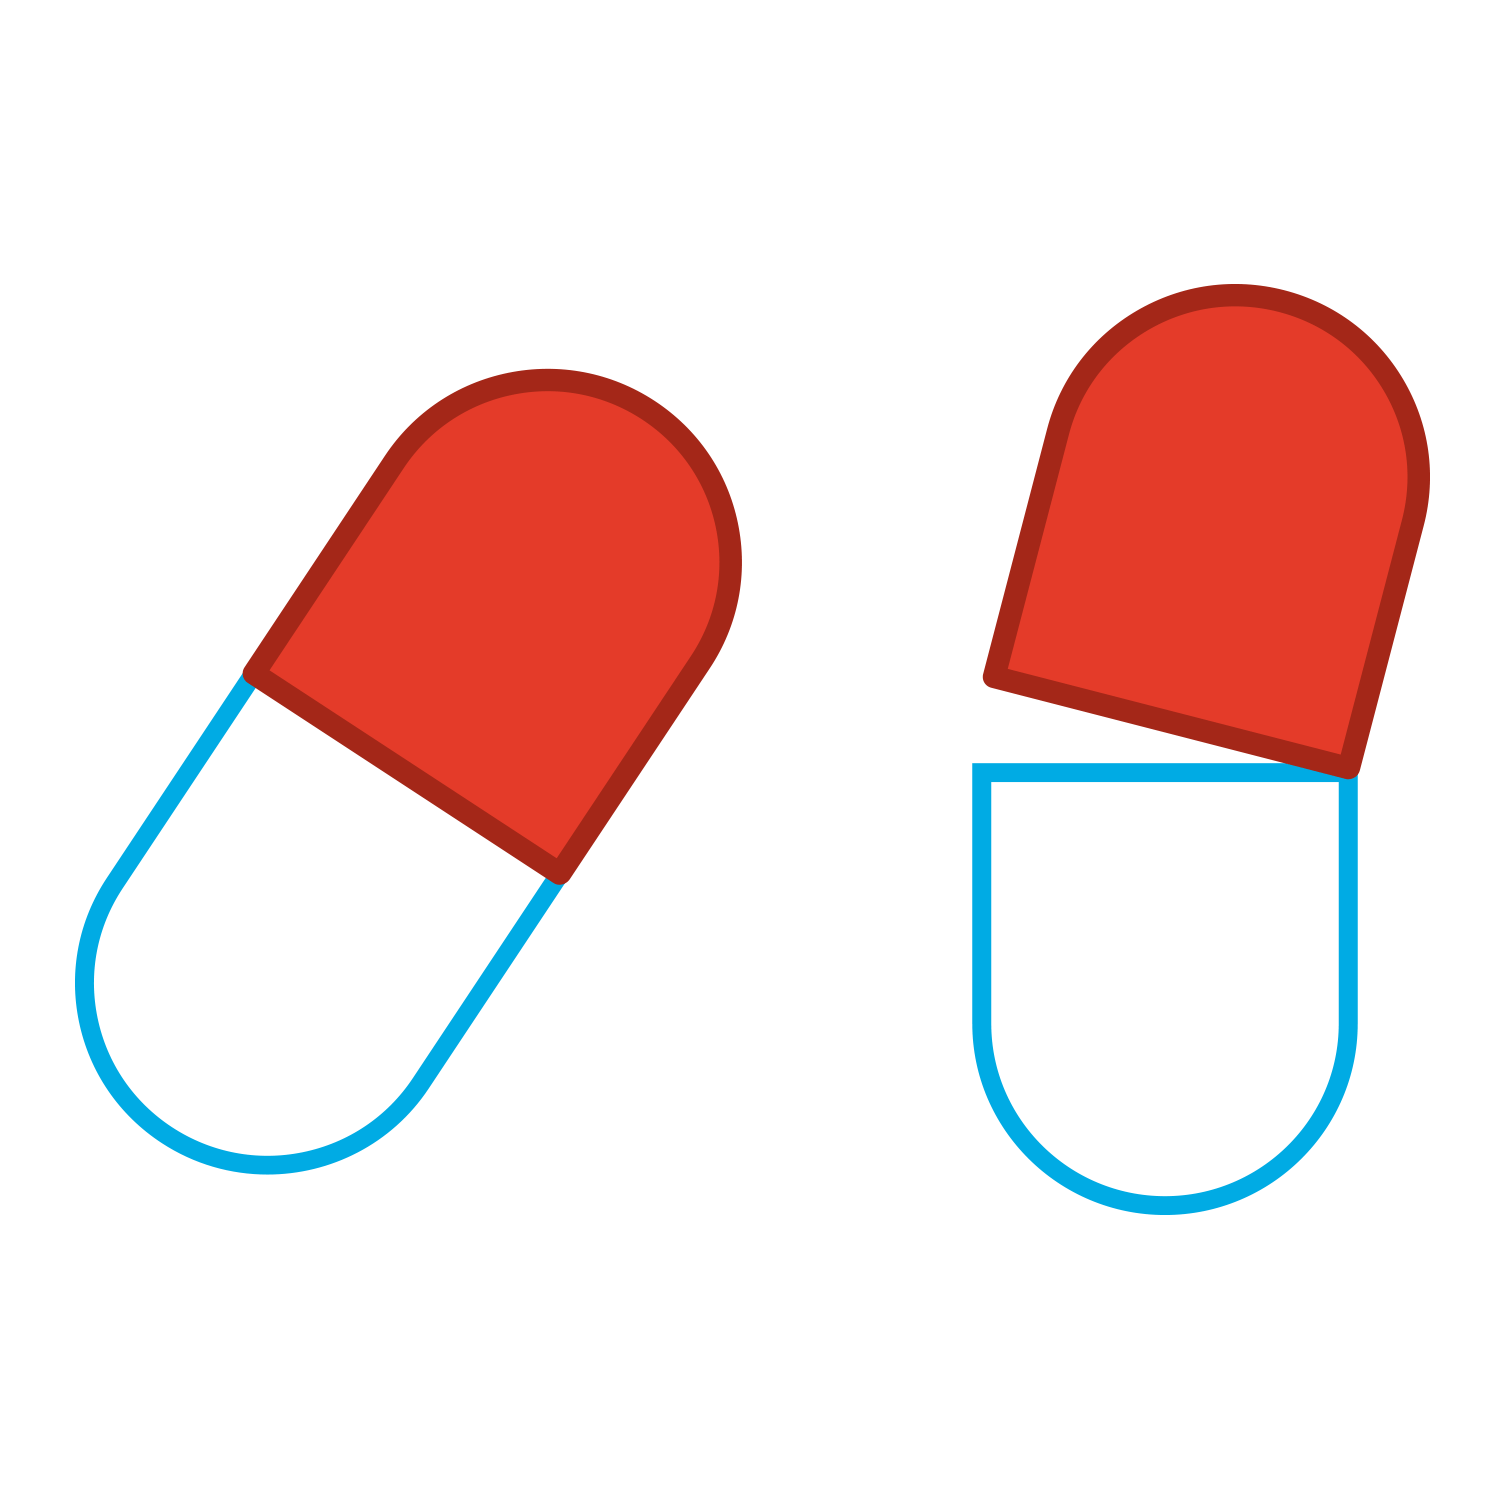 pills clipart vitamin pill